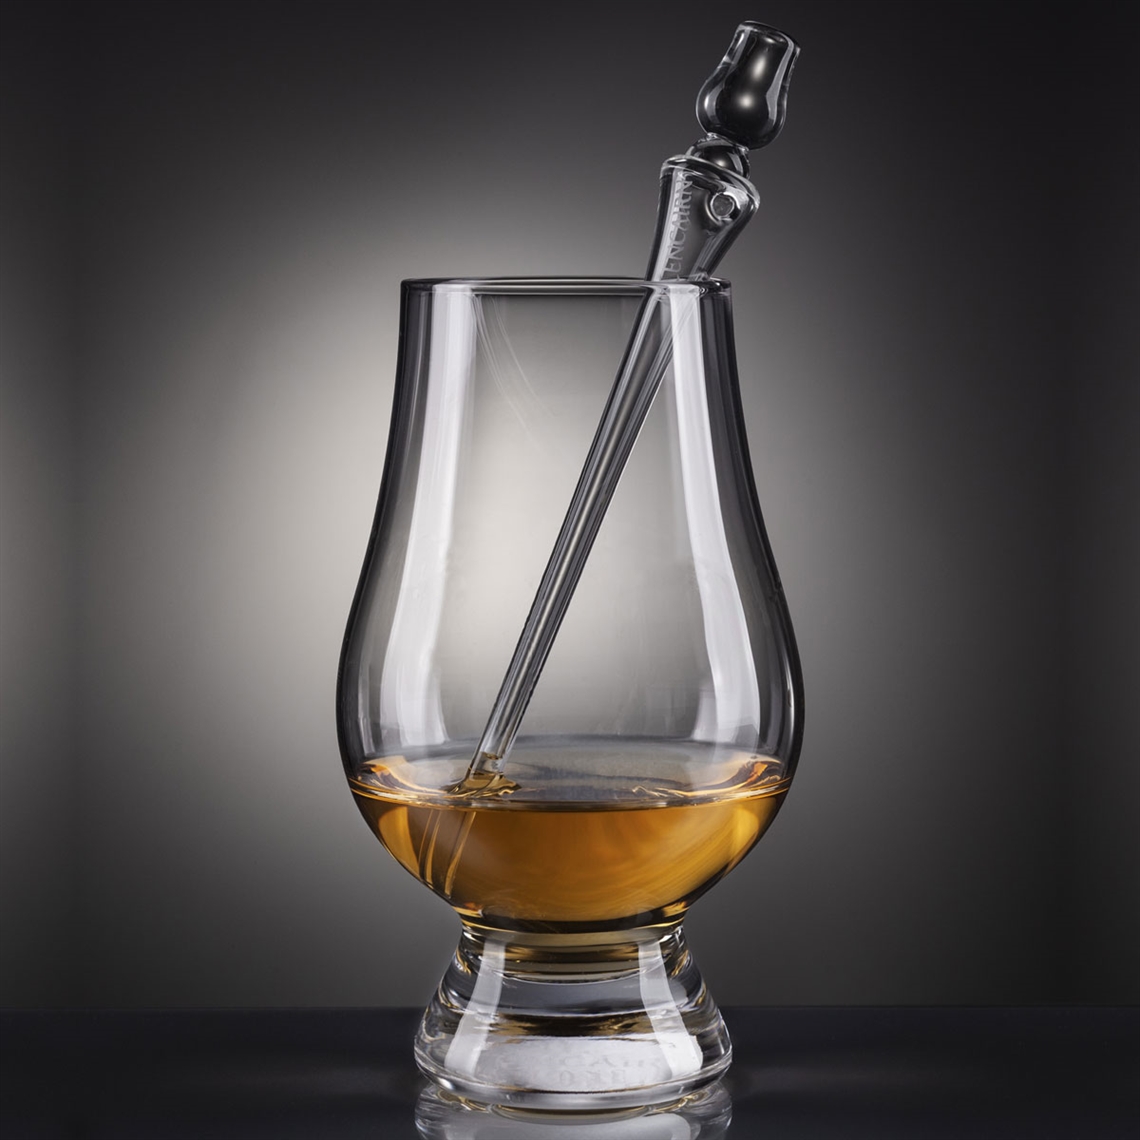 The Glencairn Whisky Glass Water Pipette